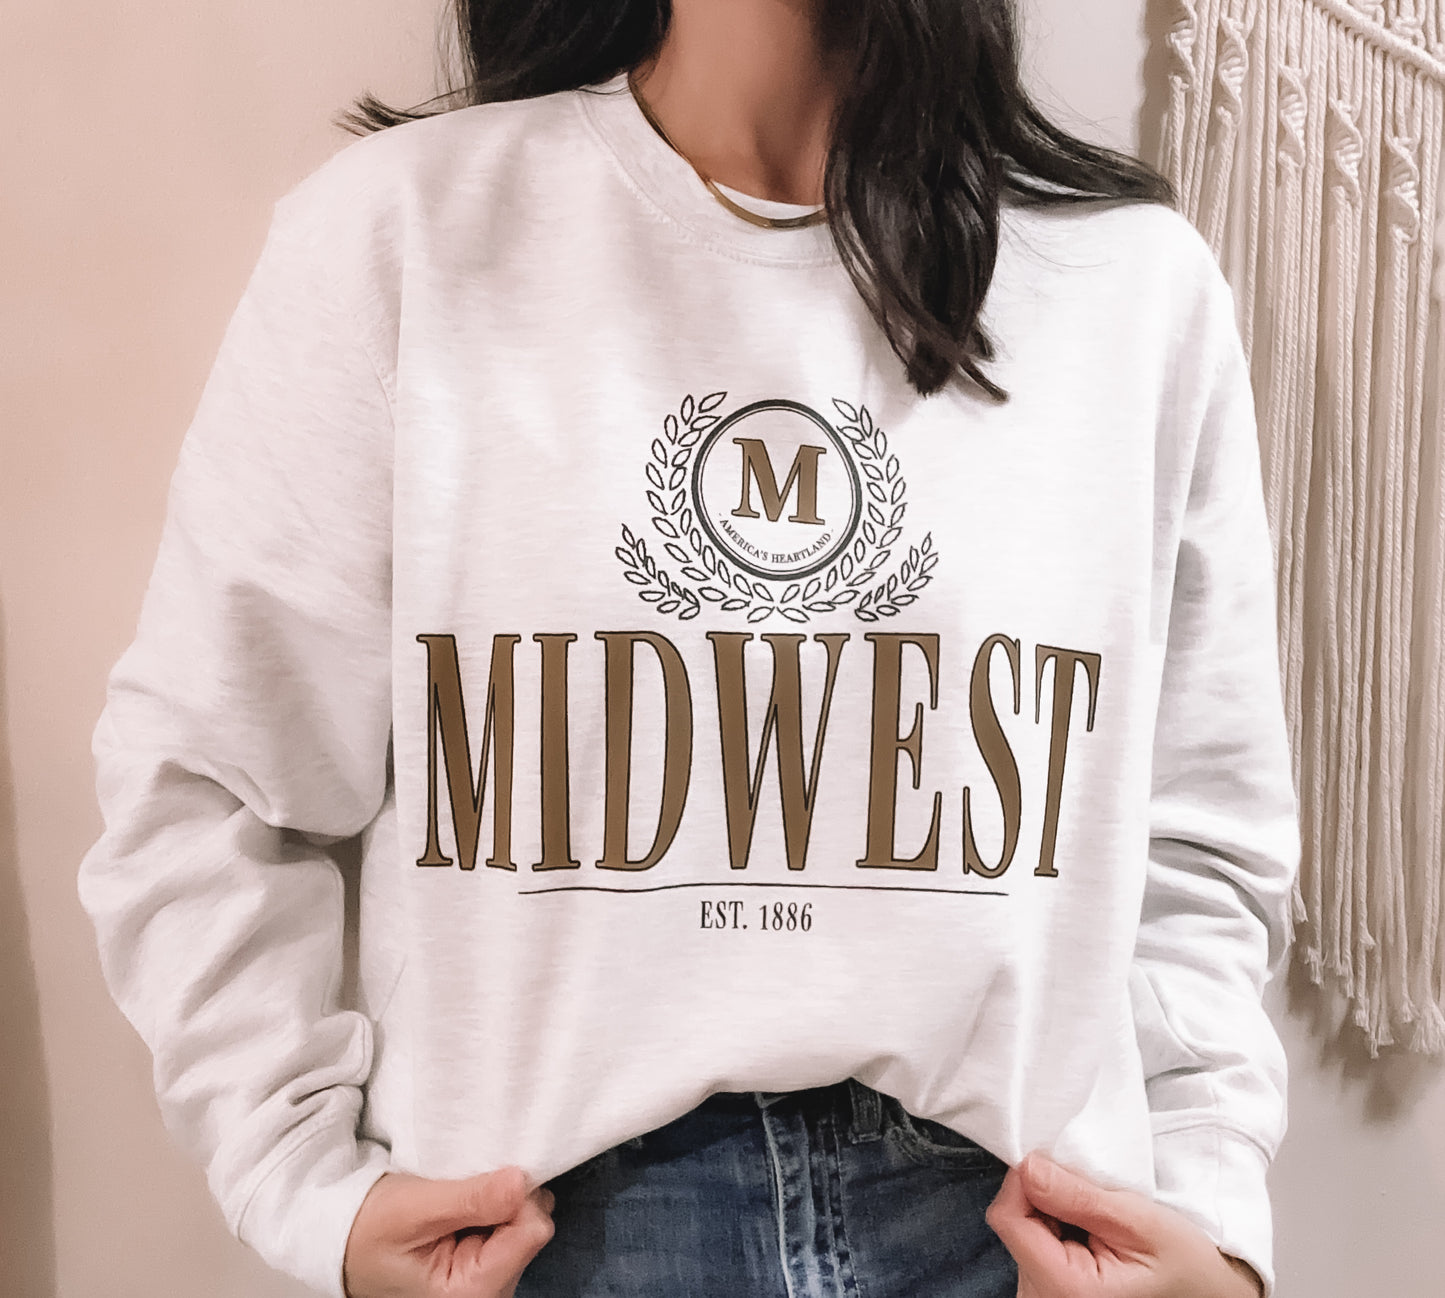 Vintage Midwest Crewneck